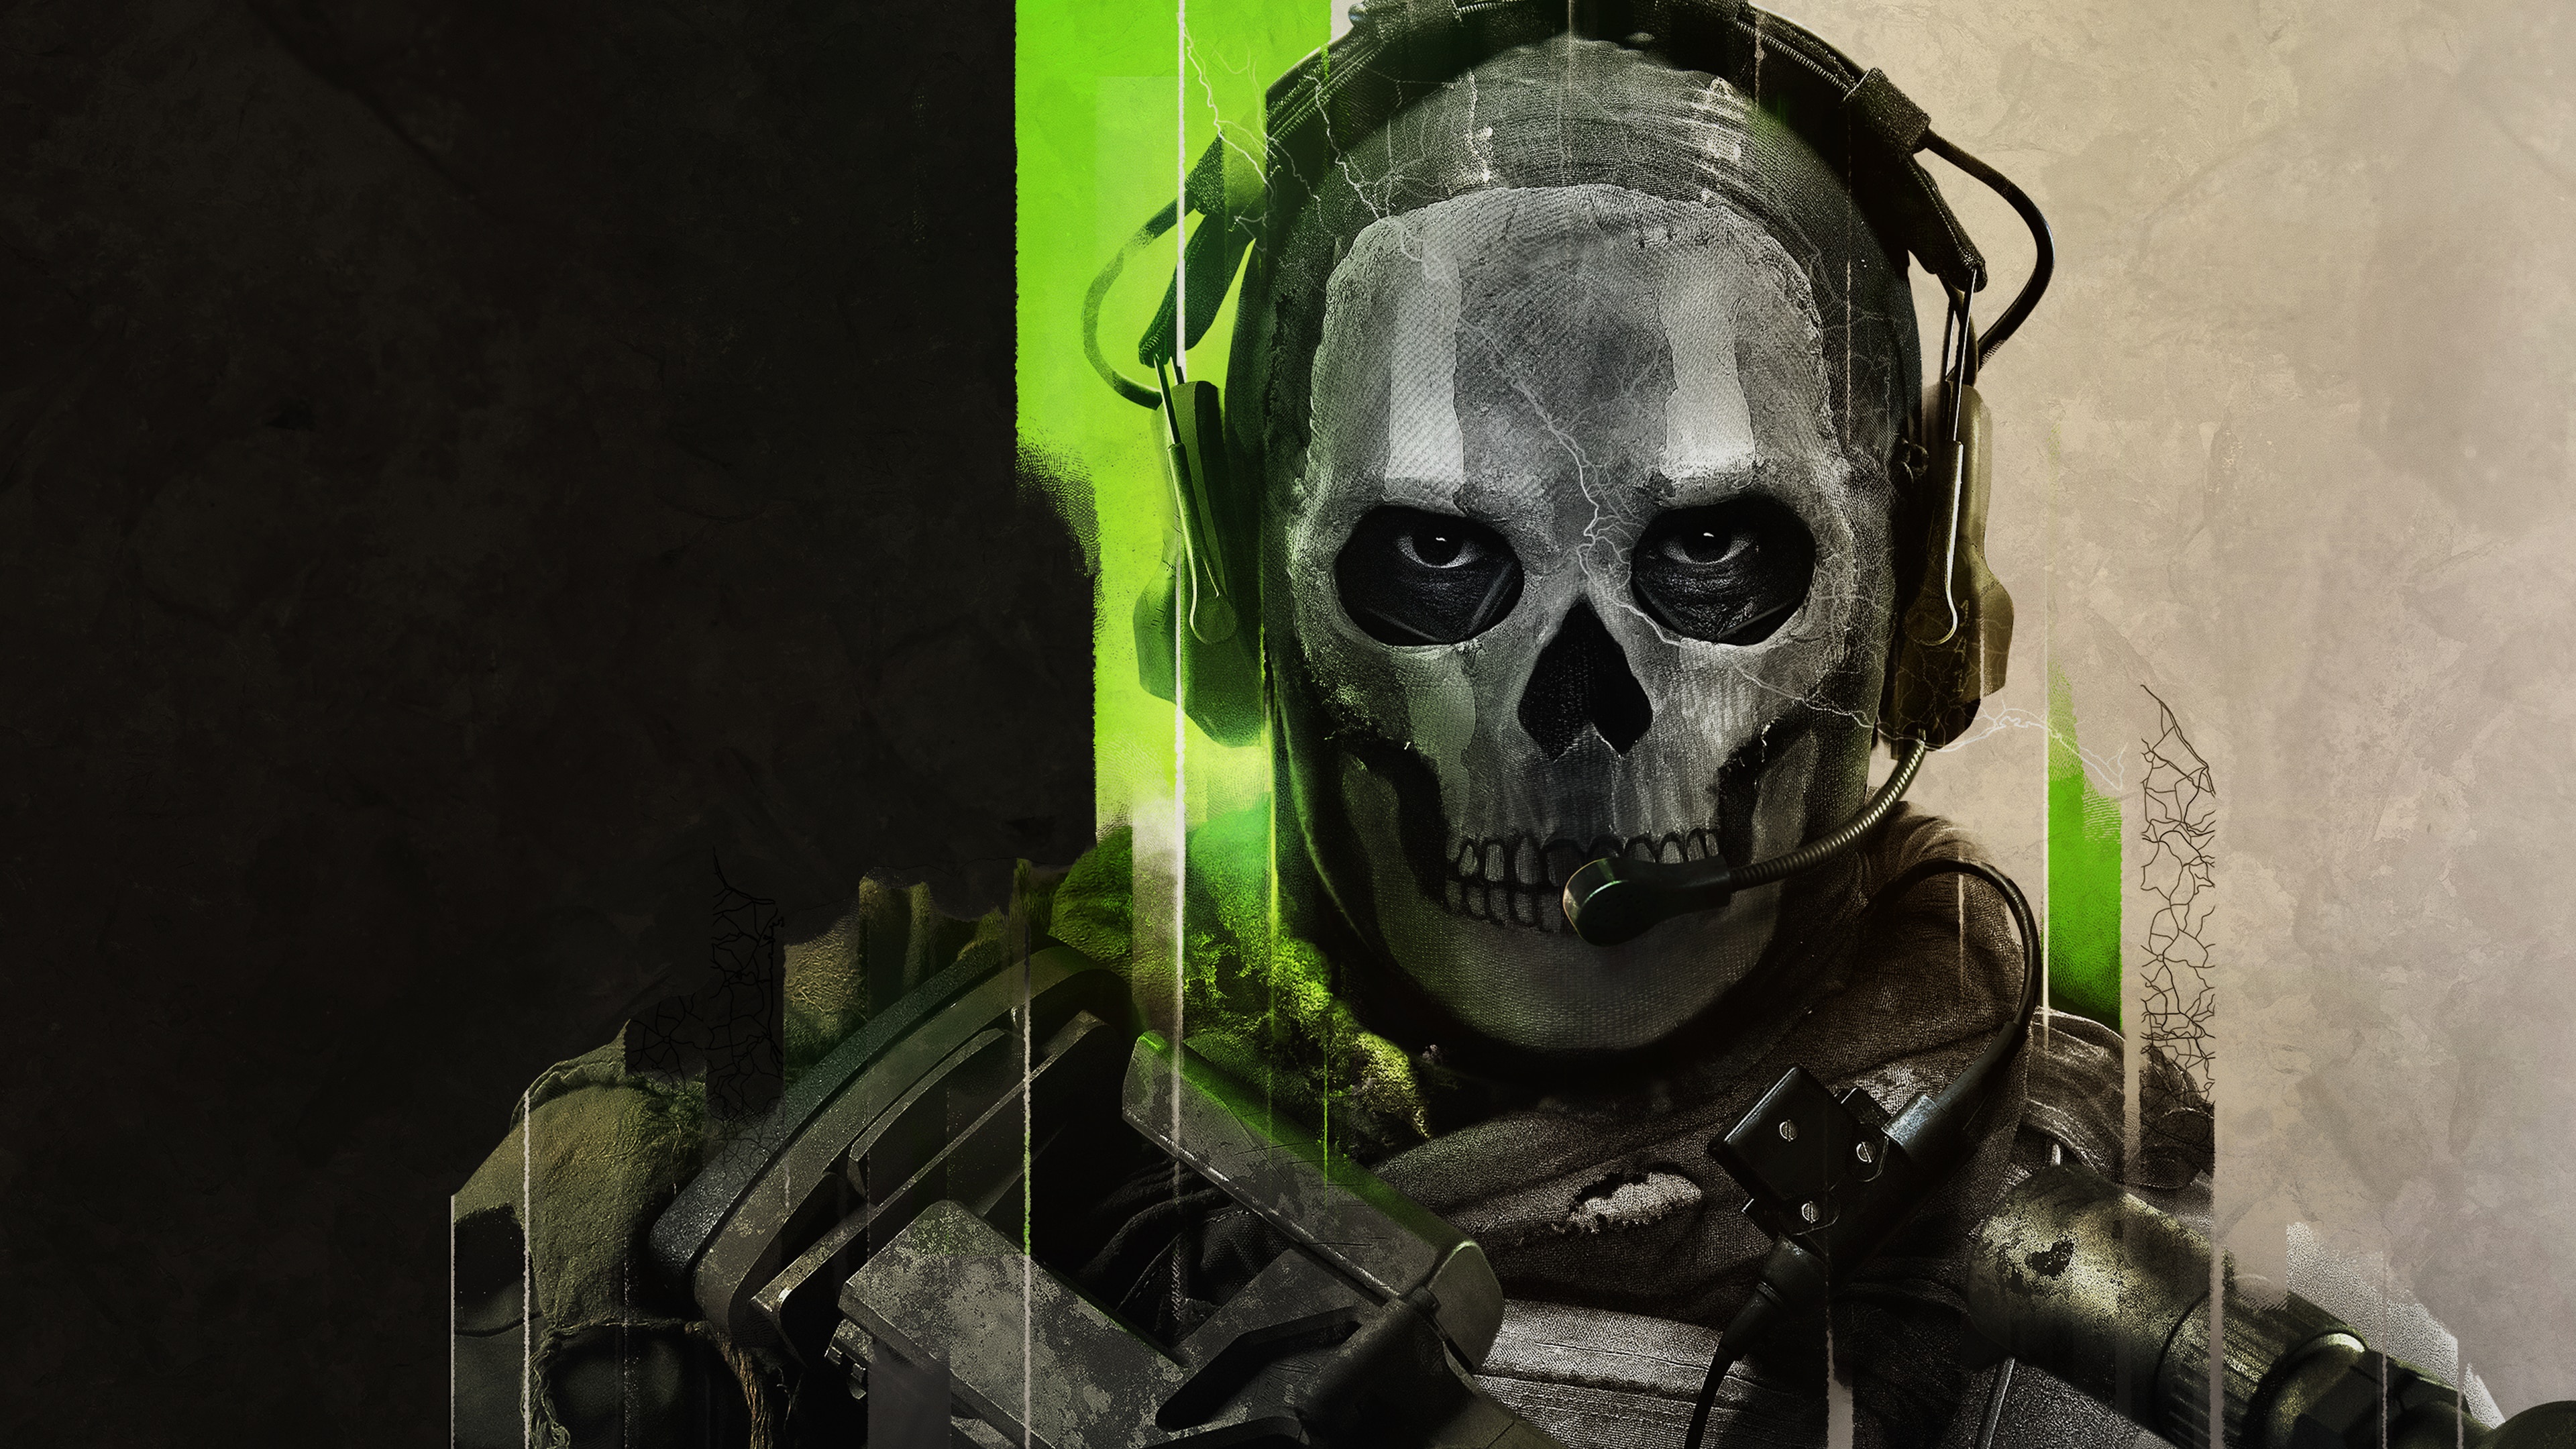 Call of Duty: Modern Warfare 2 Wallpaper 4K, Ghost, 2022 Games, Games